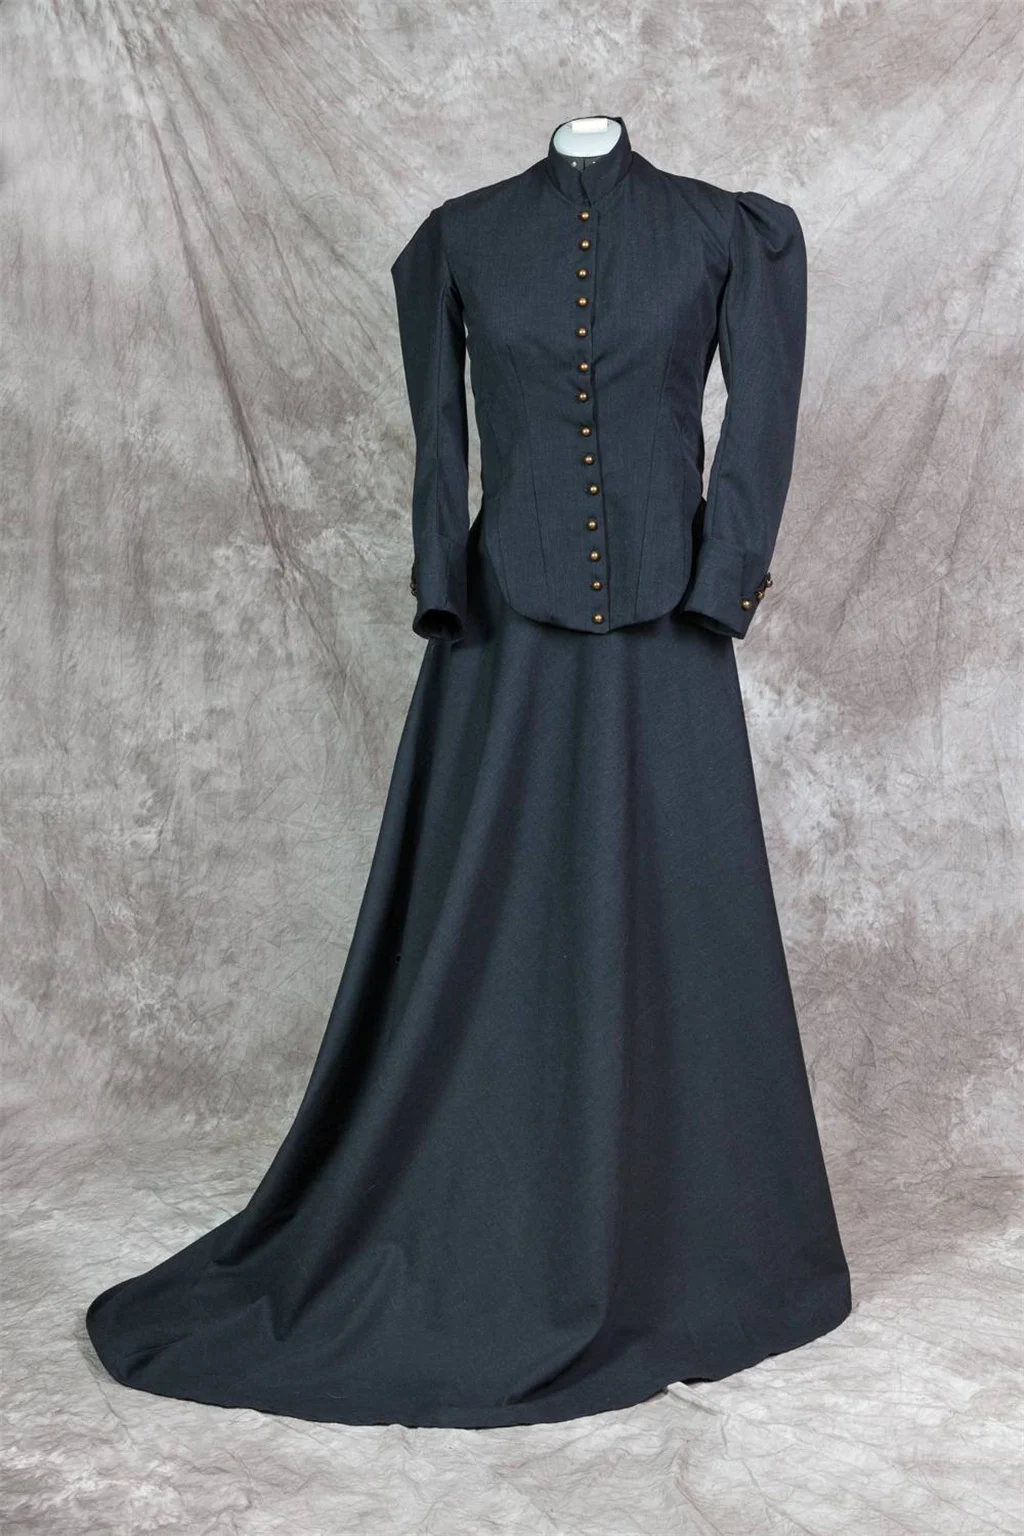 

1870th Medieval Victorian Steampunk Gothic Dress Retro Walking Dress Riding Habit Vintage Costume Civil War Theatre Costume for